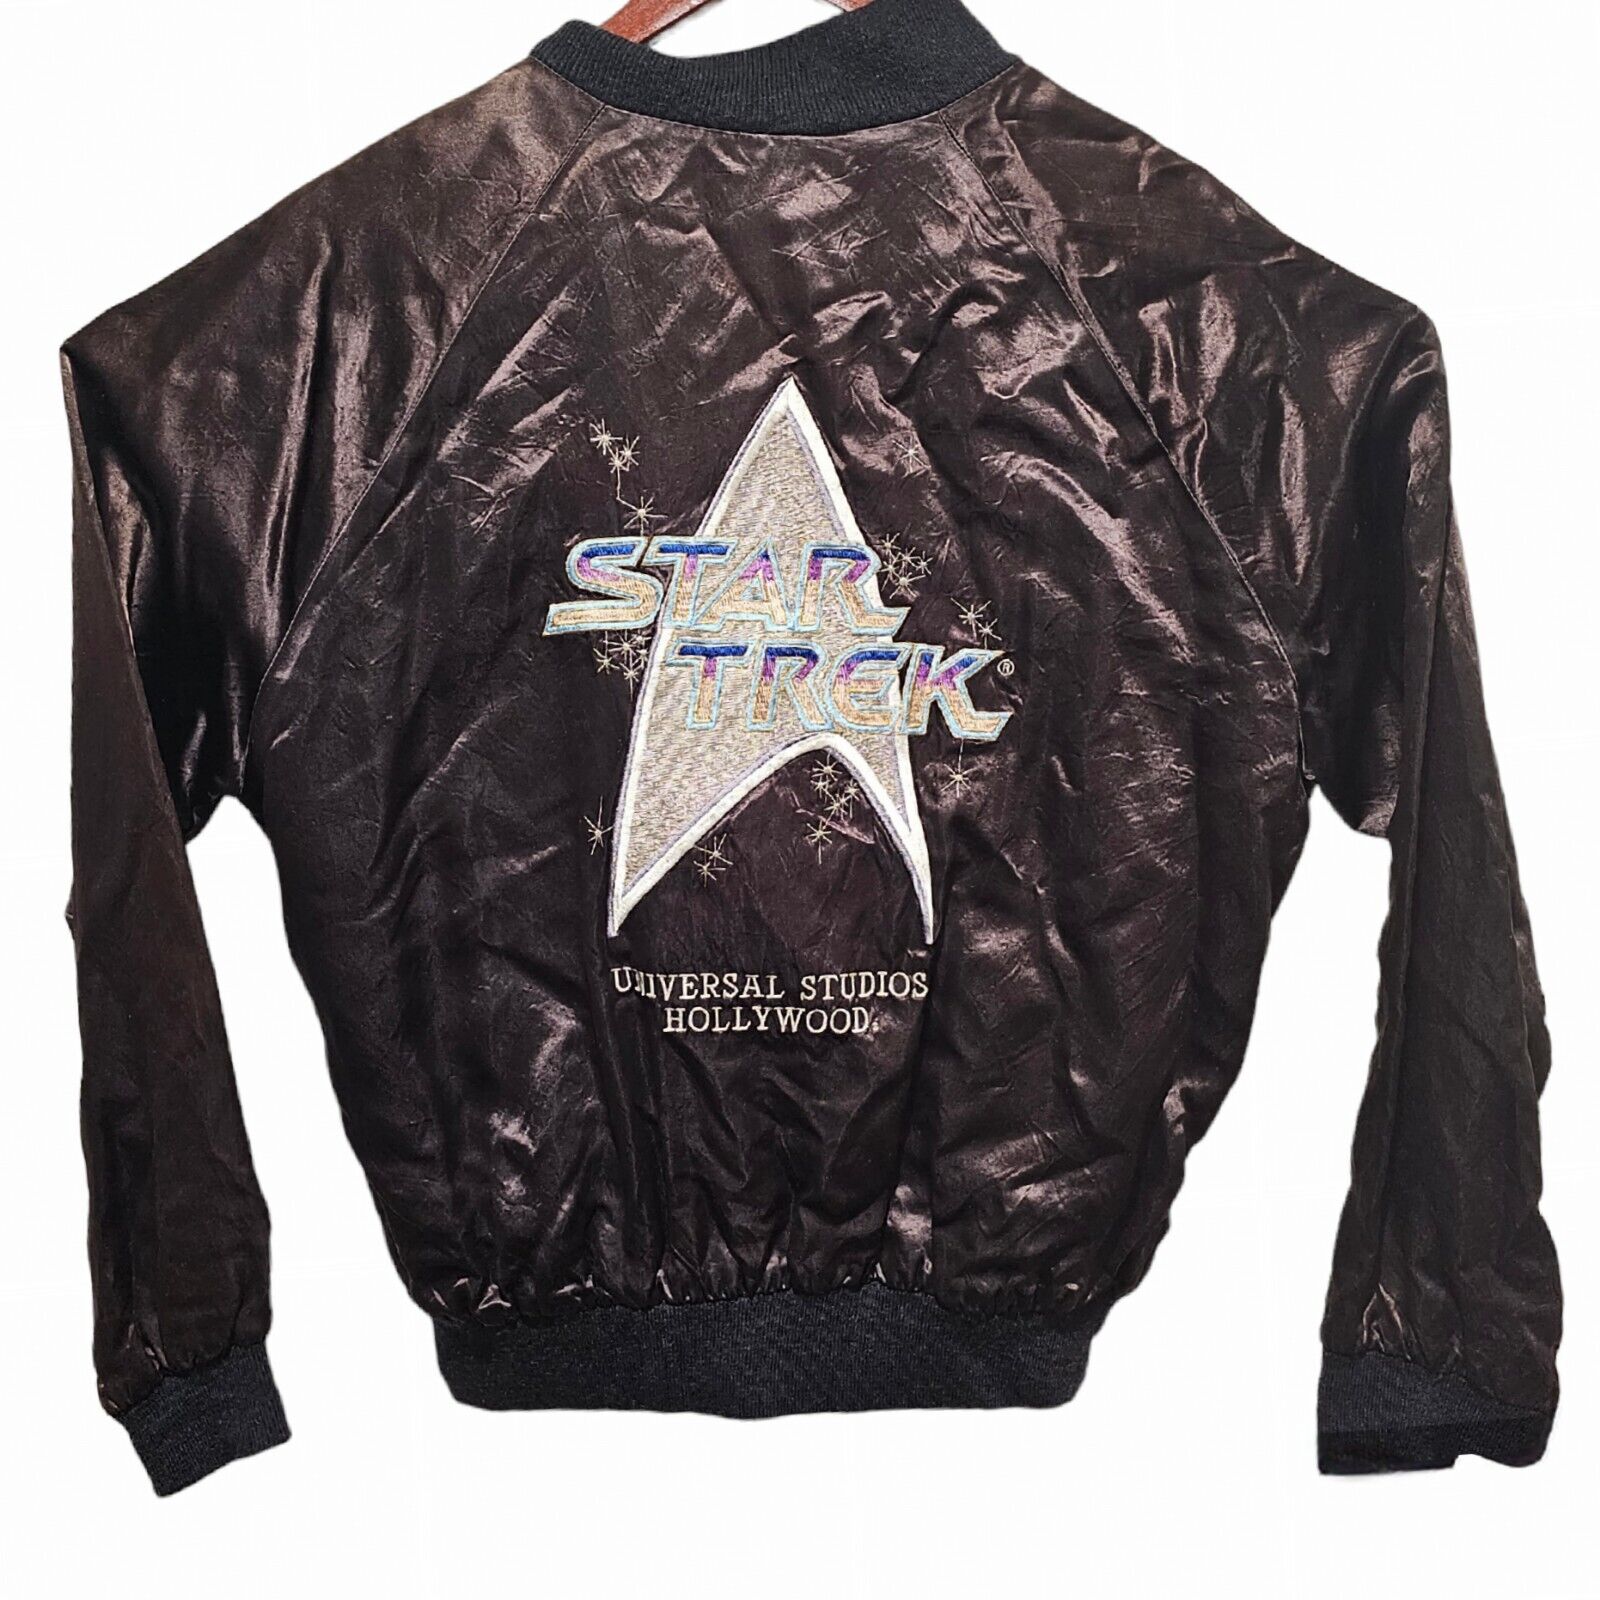 Vintage STAR TREK Satin Jacket from UNIVERSAL STUDIOS HOLLYWOOD - Large USA MADE